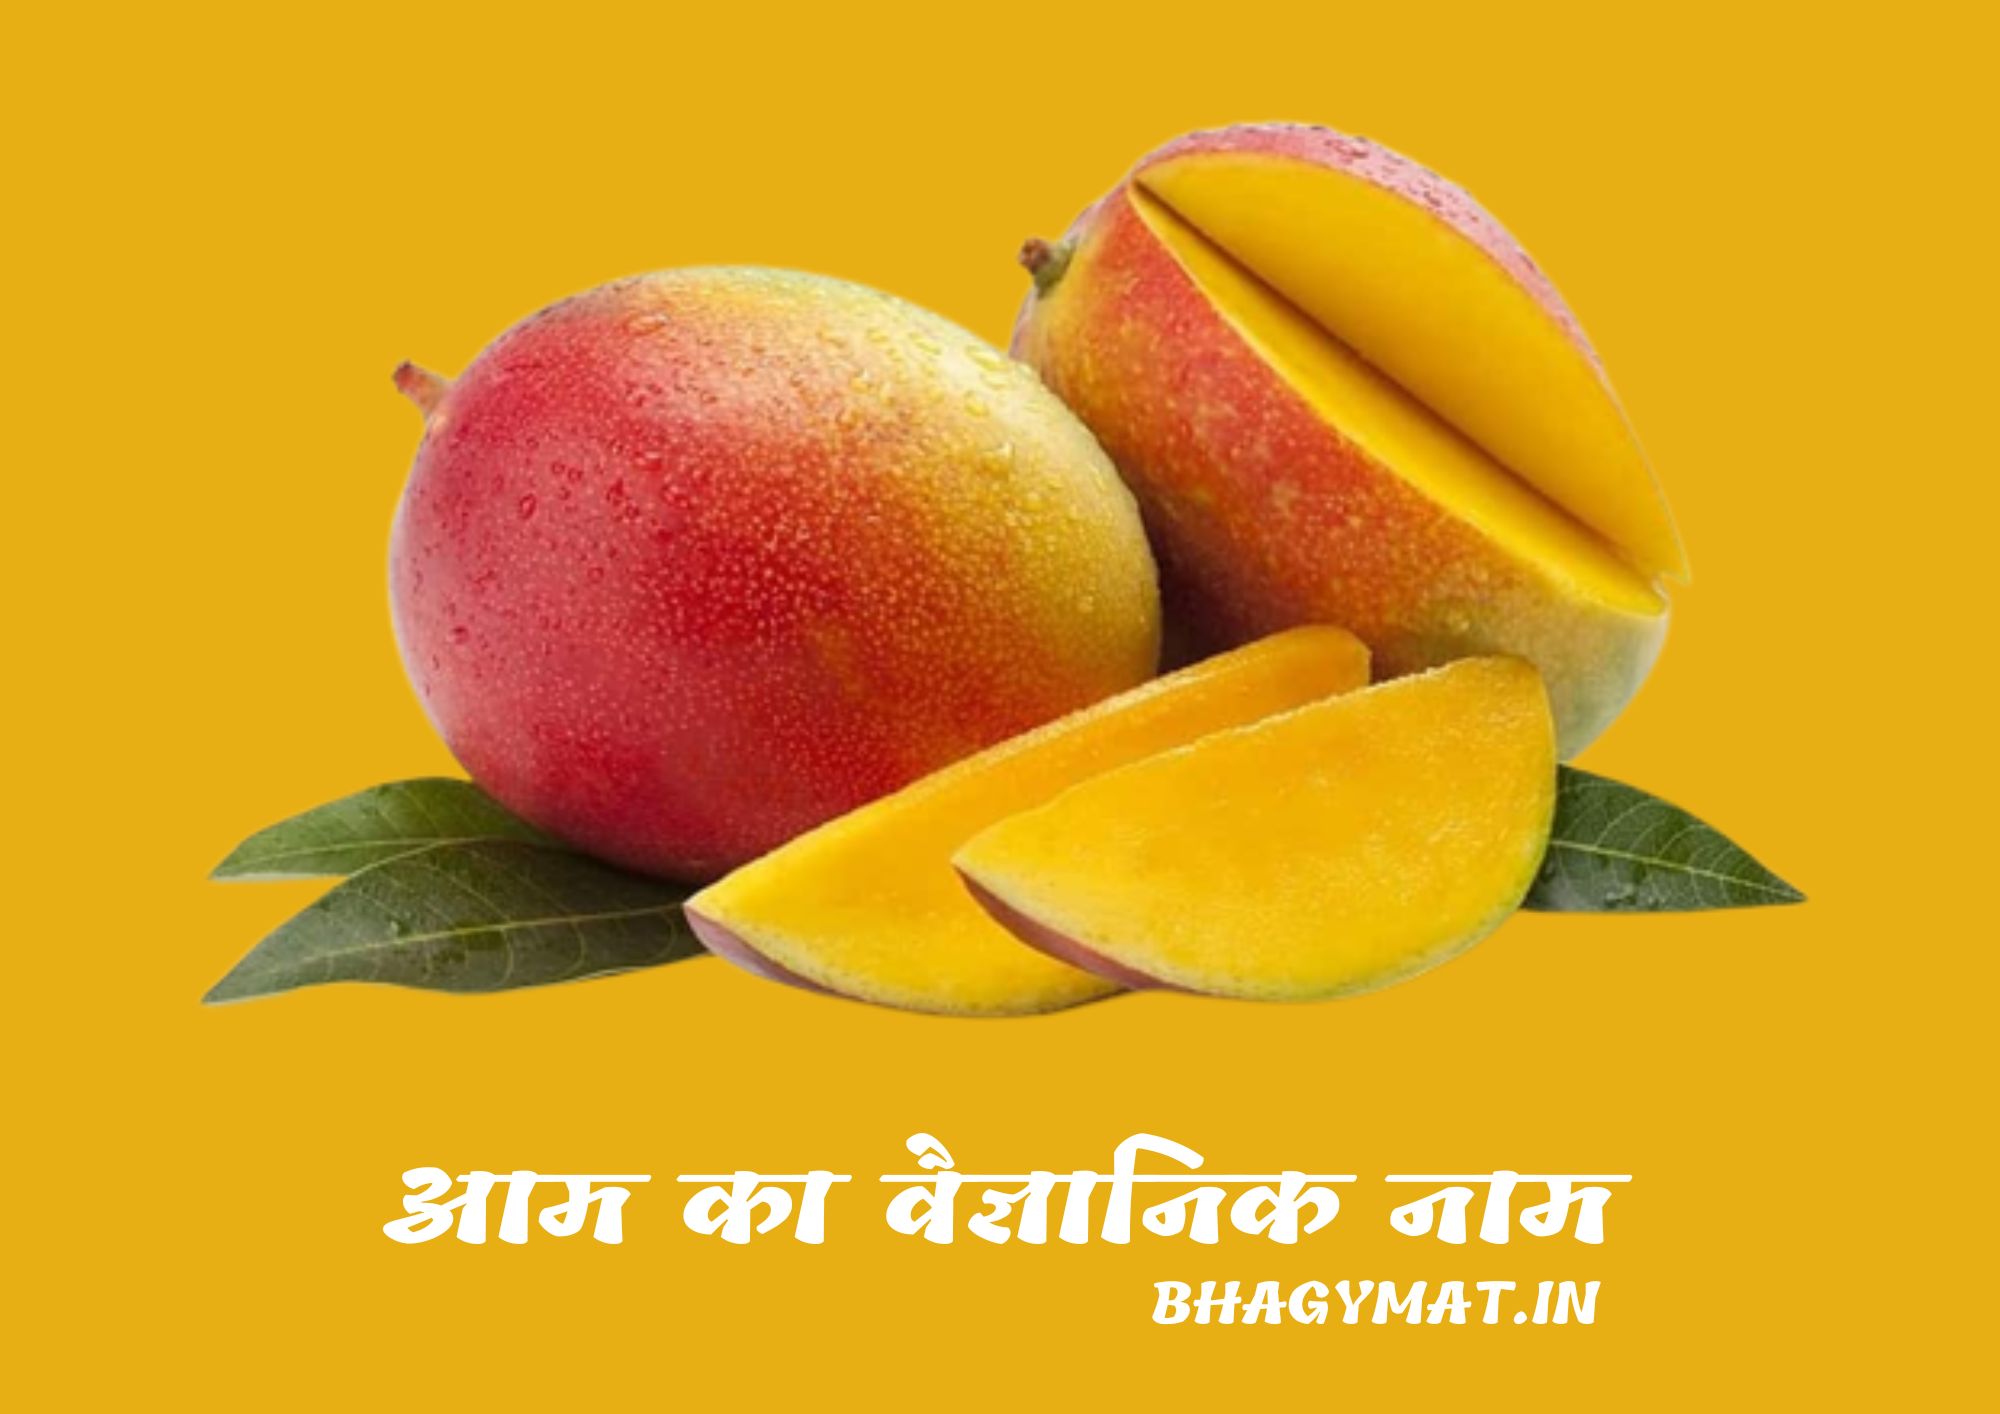 आम का वैज्ञानिक नाम क्या है (Aam Ka Vaigyanik Naam Kya Hai) - Mango Scientific Name In Hindi